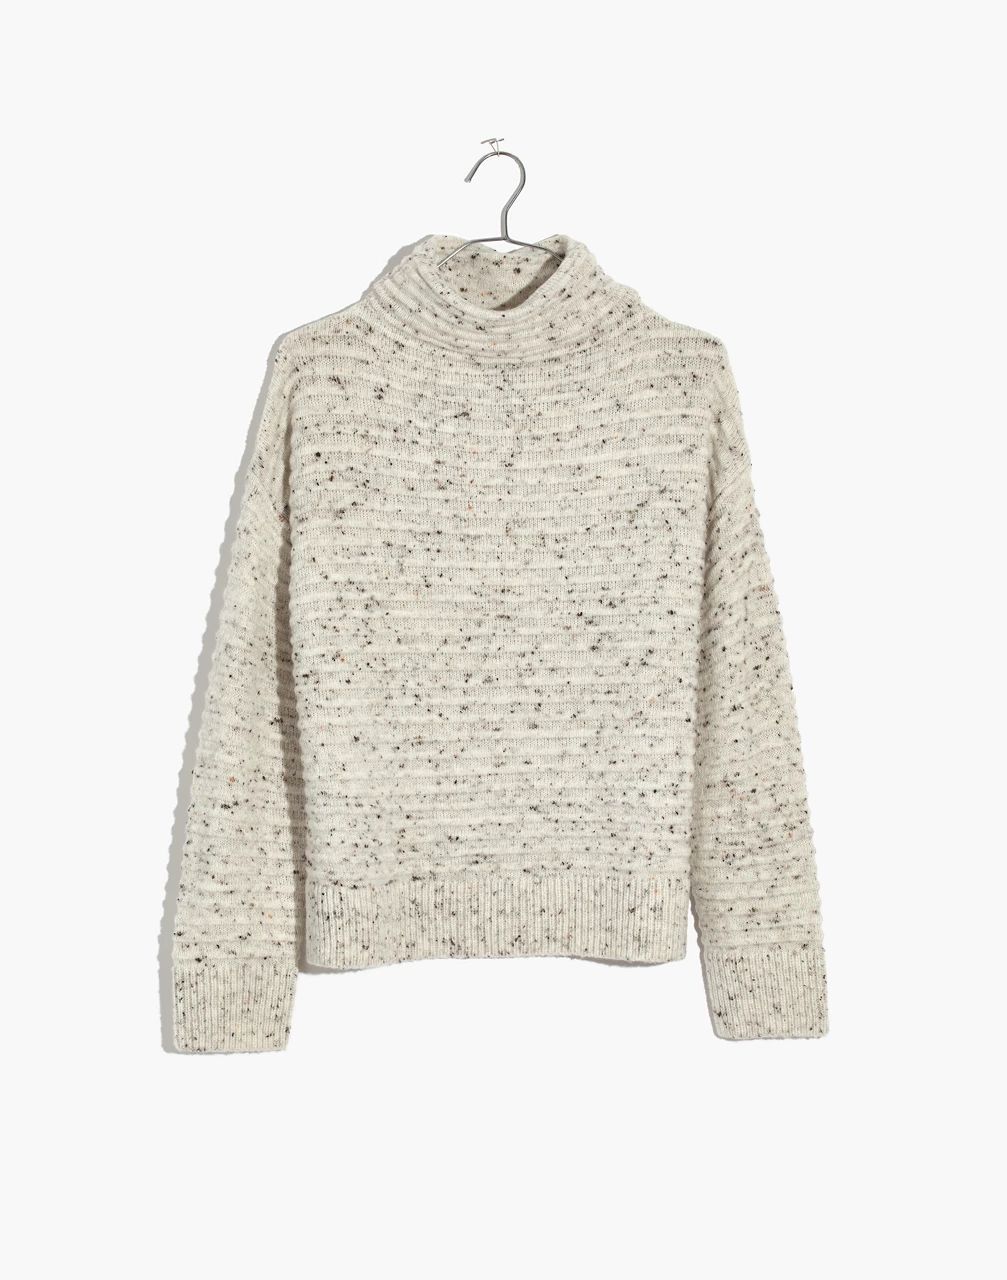 Donegal Belmont Mockneck Sweater in Coziest Yarn | Madewell